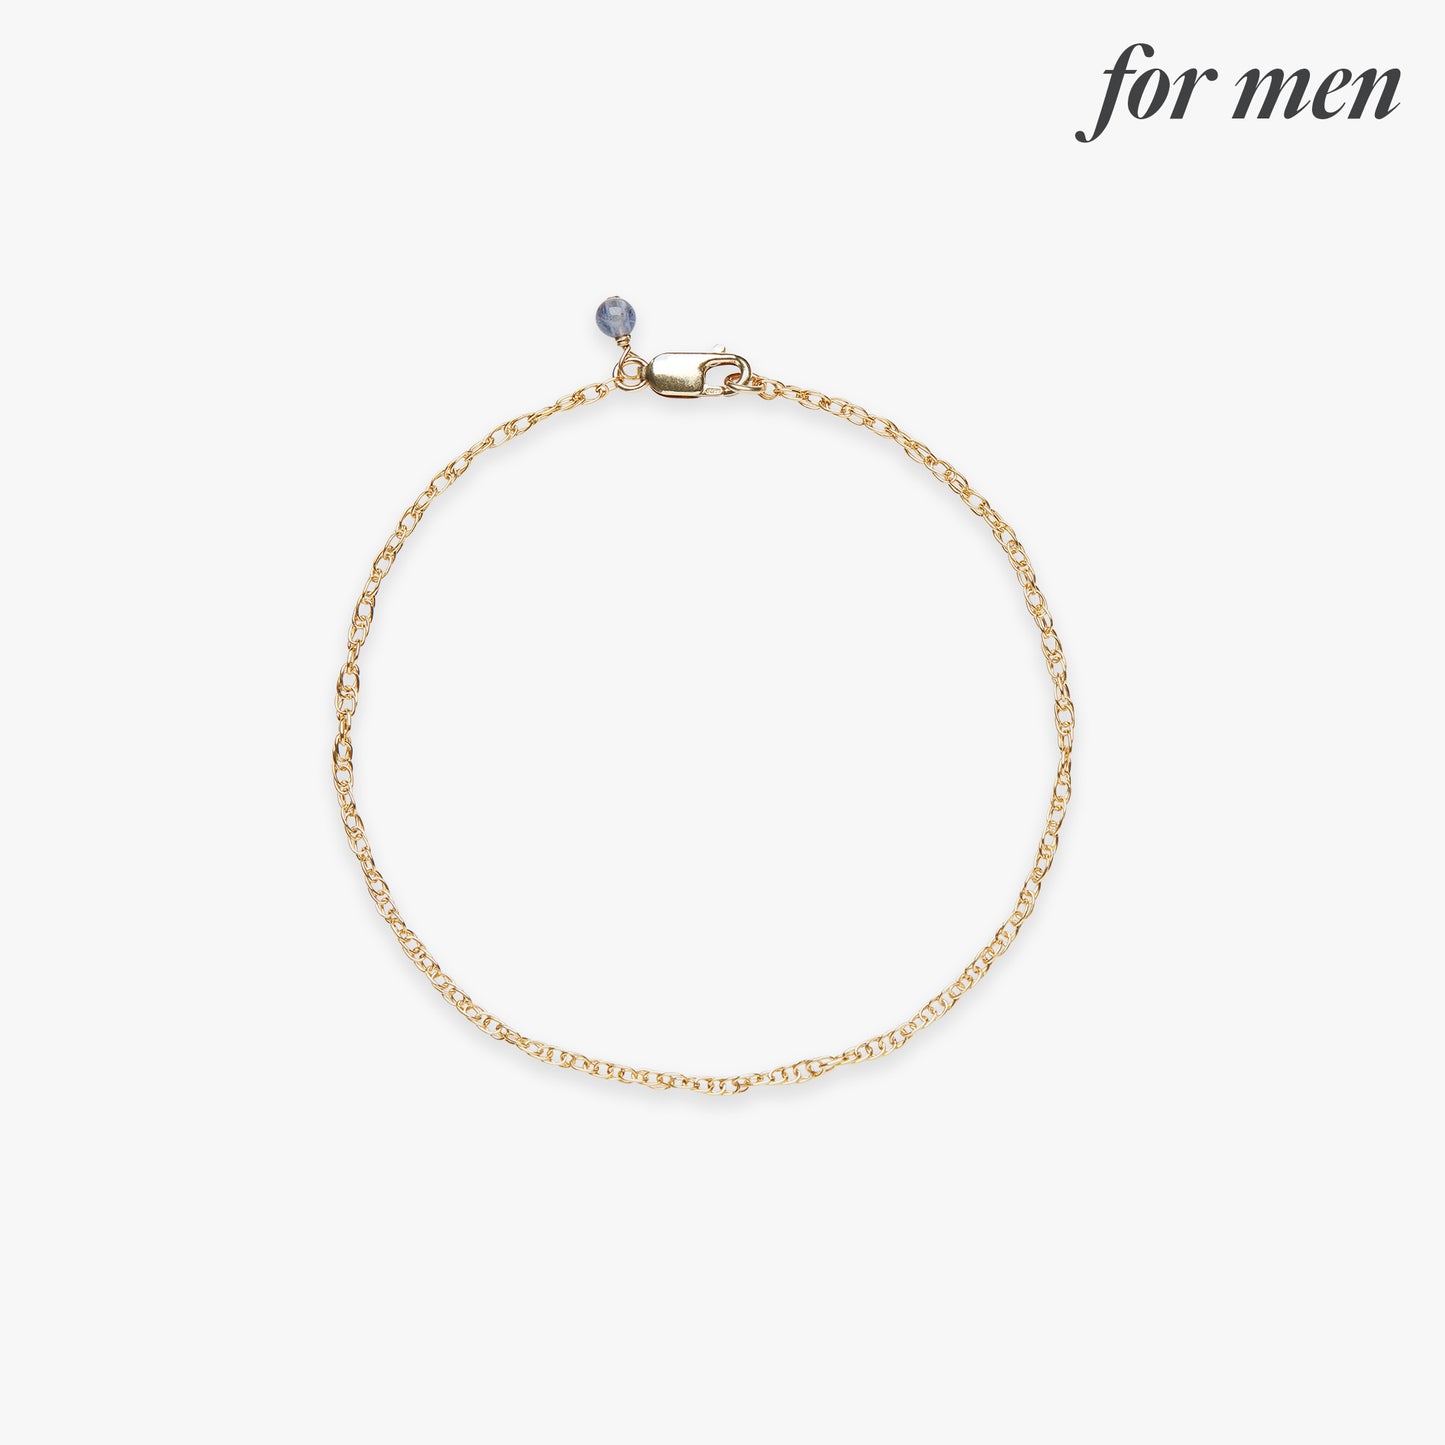 Twist chain bracelet gold filled for men